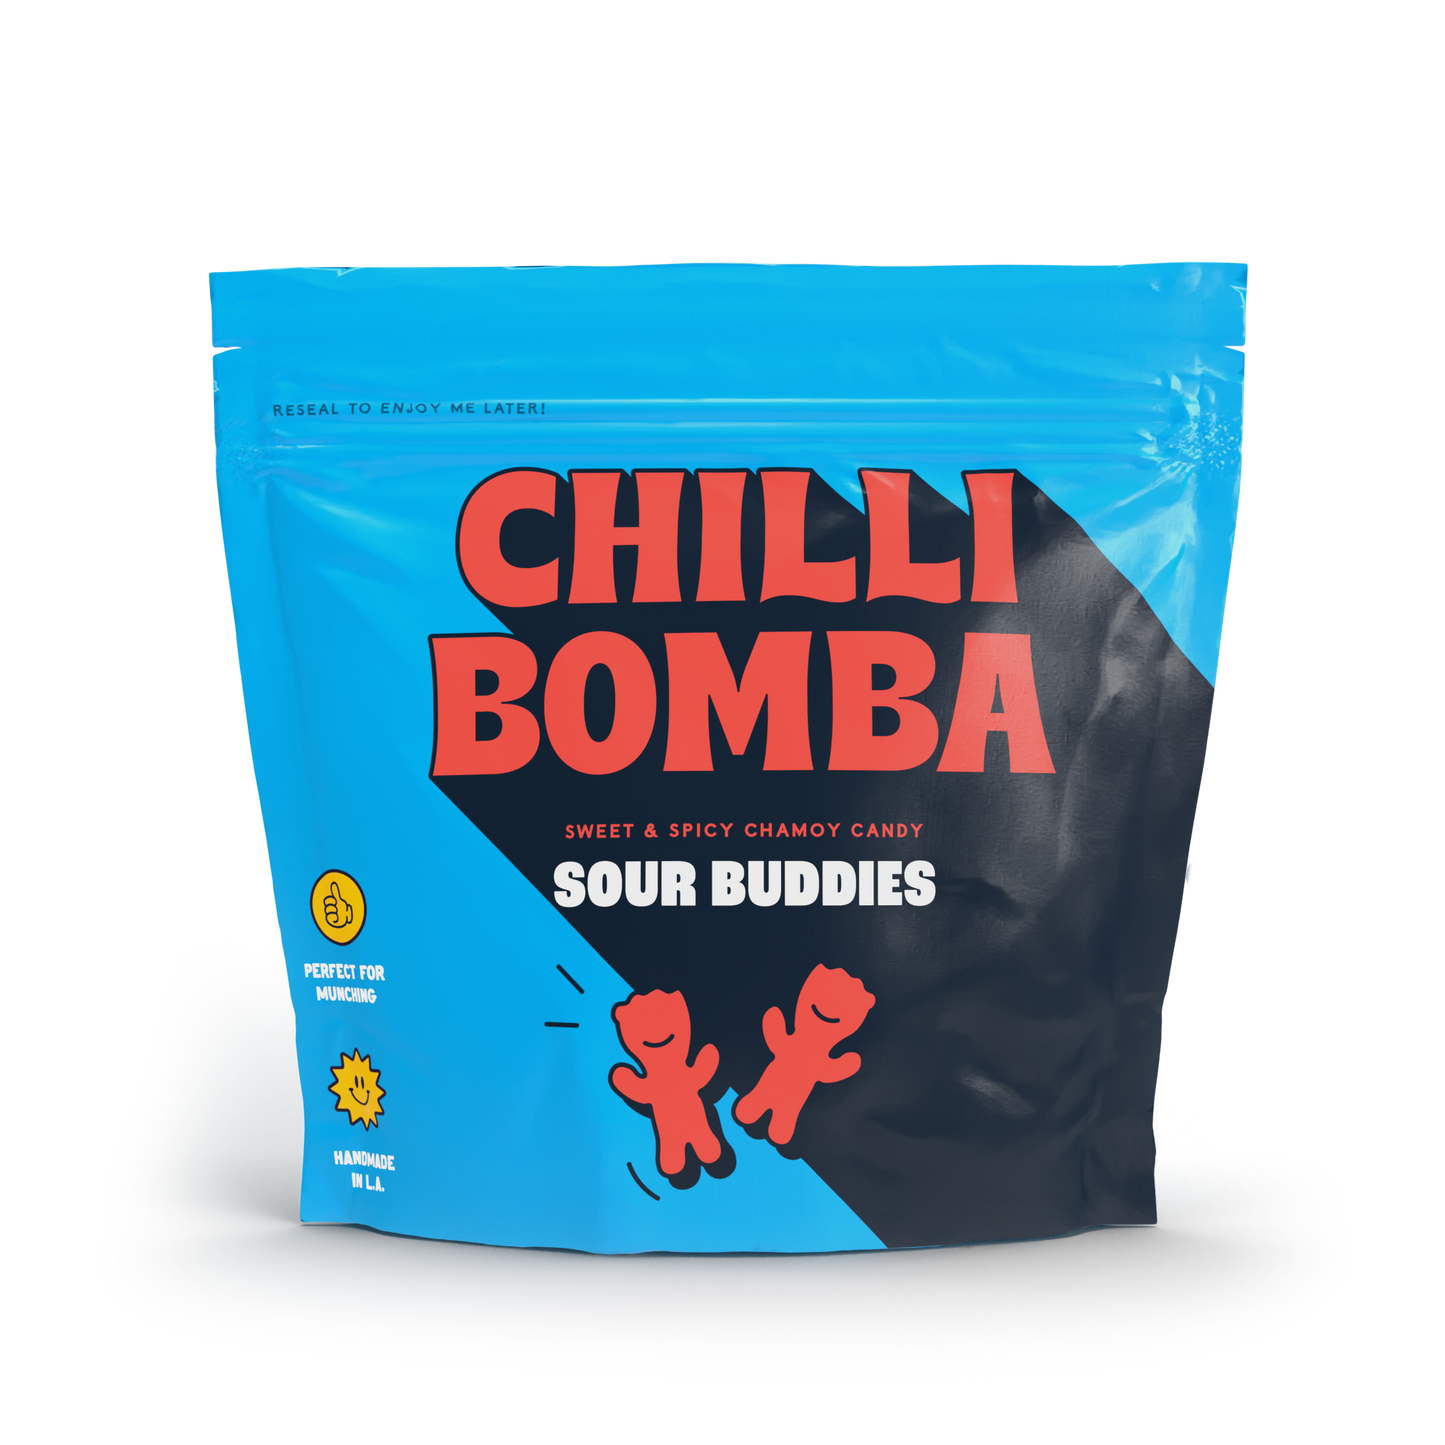 Chilli Bomba Sour Buddies 8oz